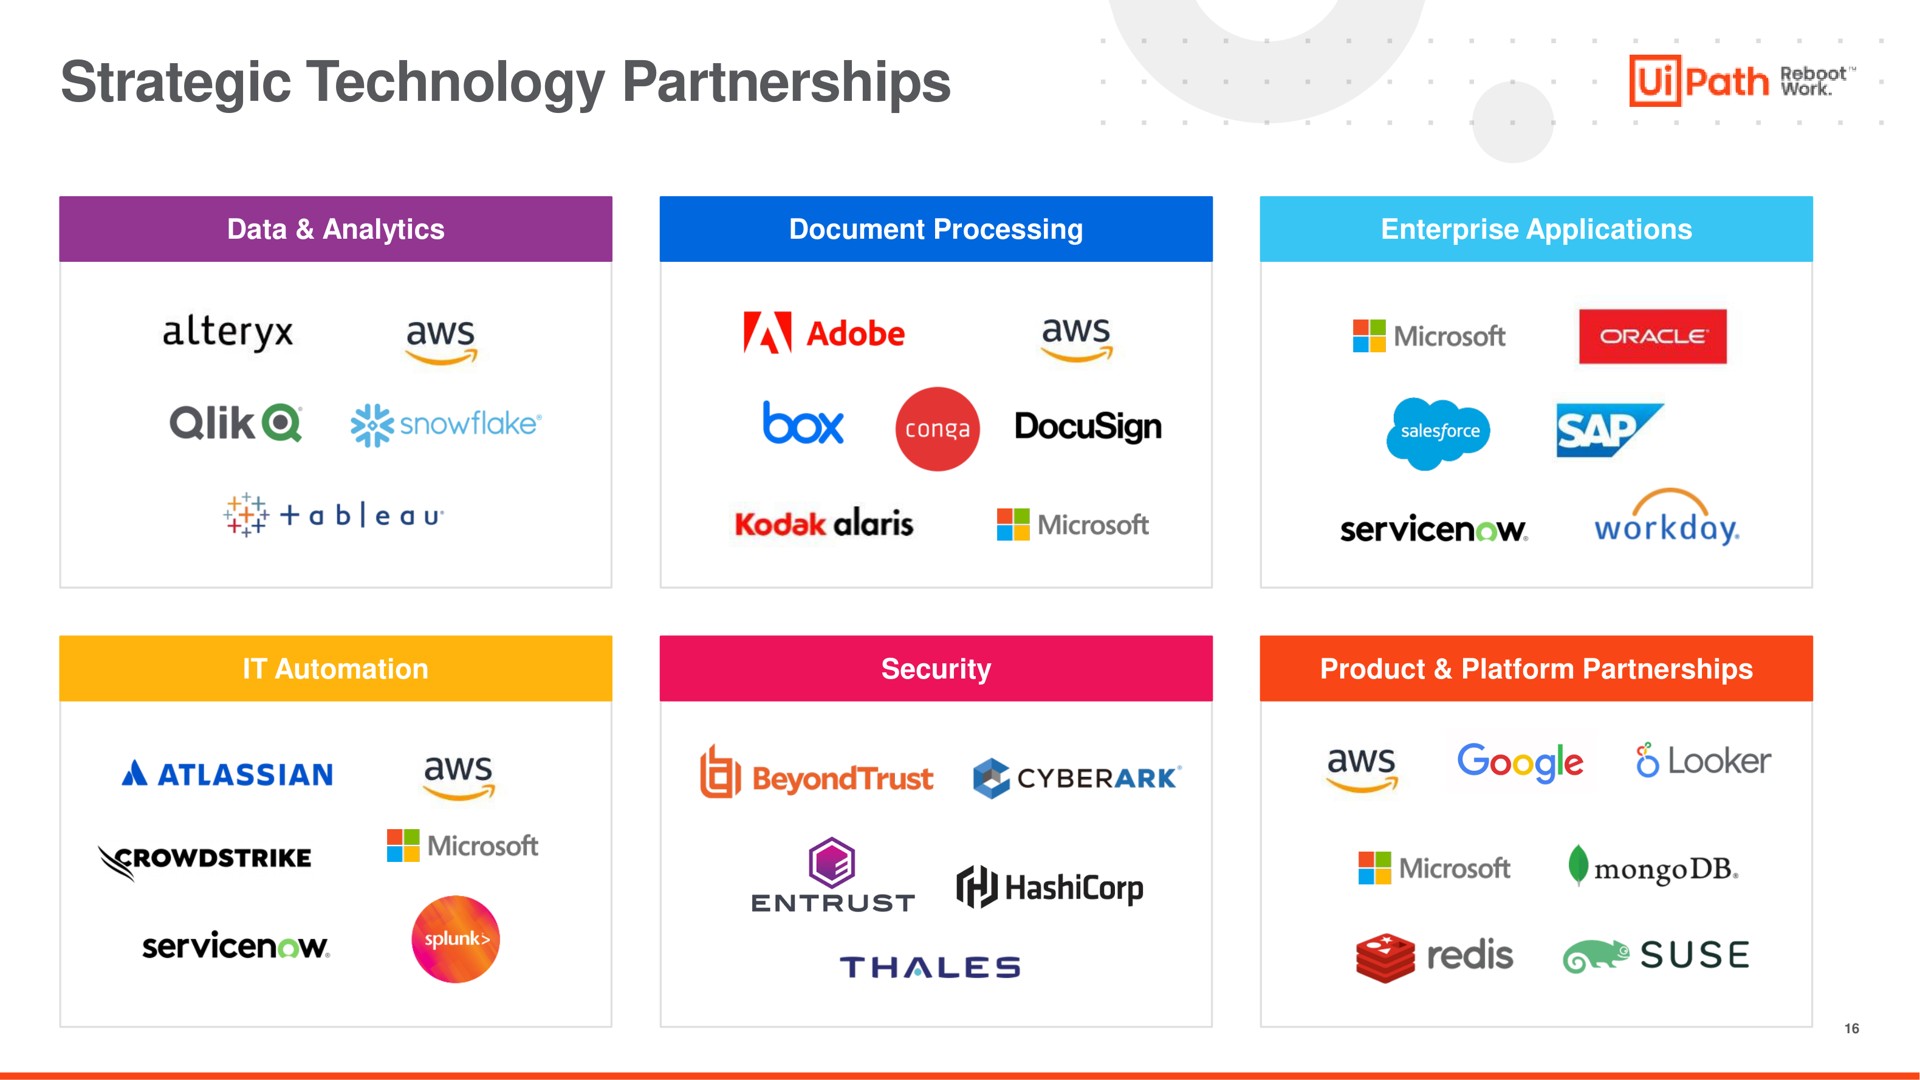 strategic technology partnerships path bee duke box | UiPath